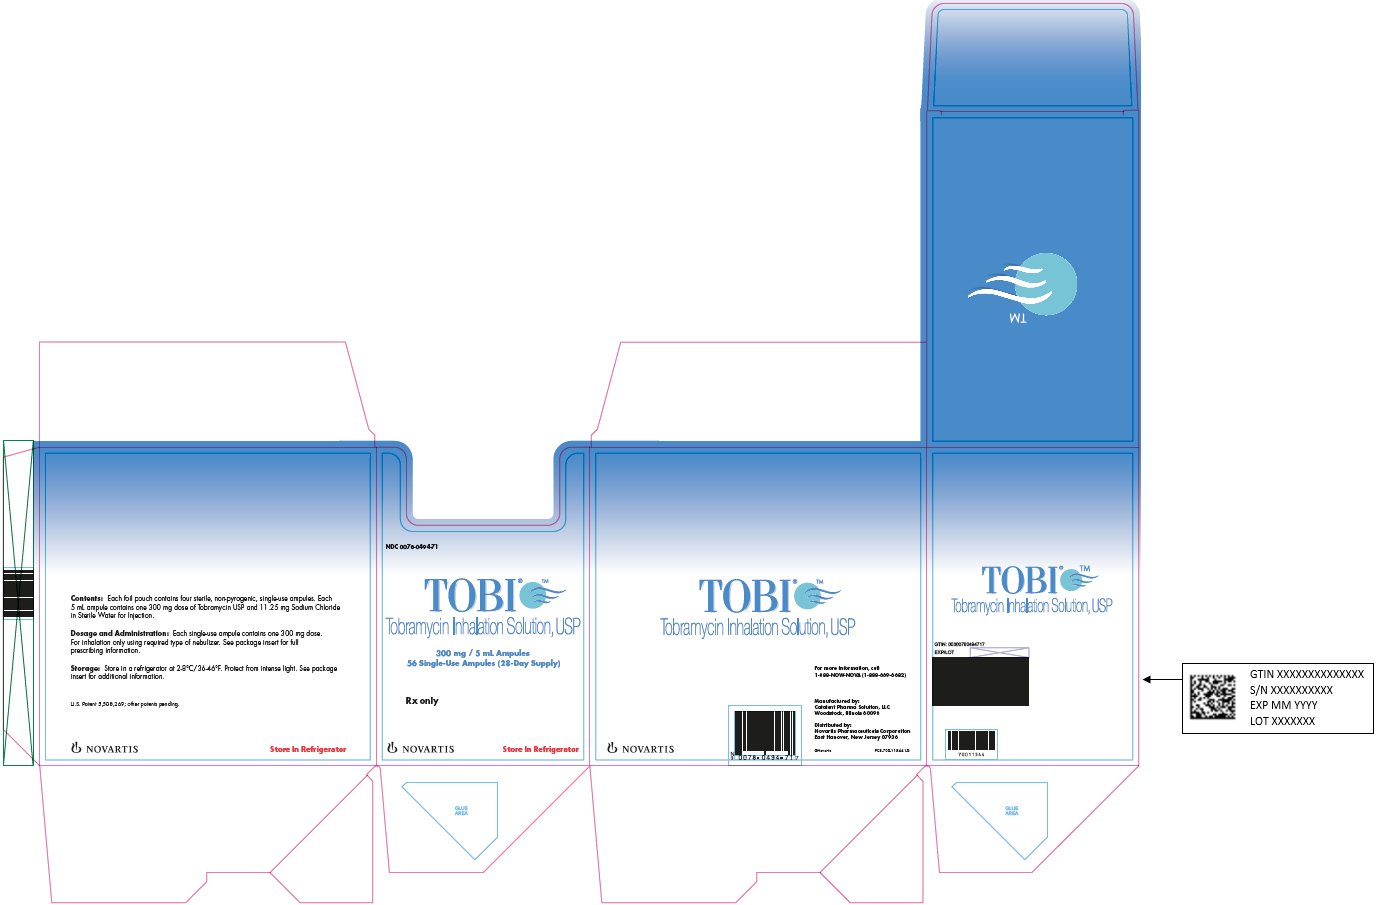 TOBI® 300 mg/5 mL Ampules Carton Label 